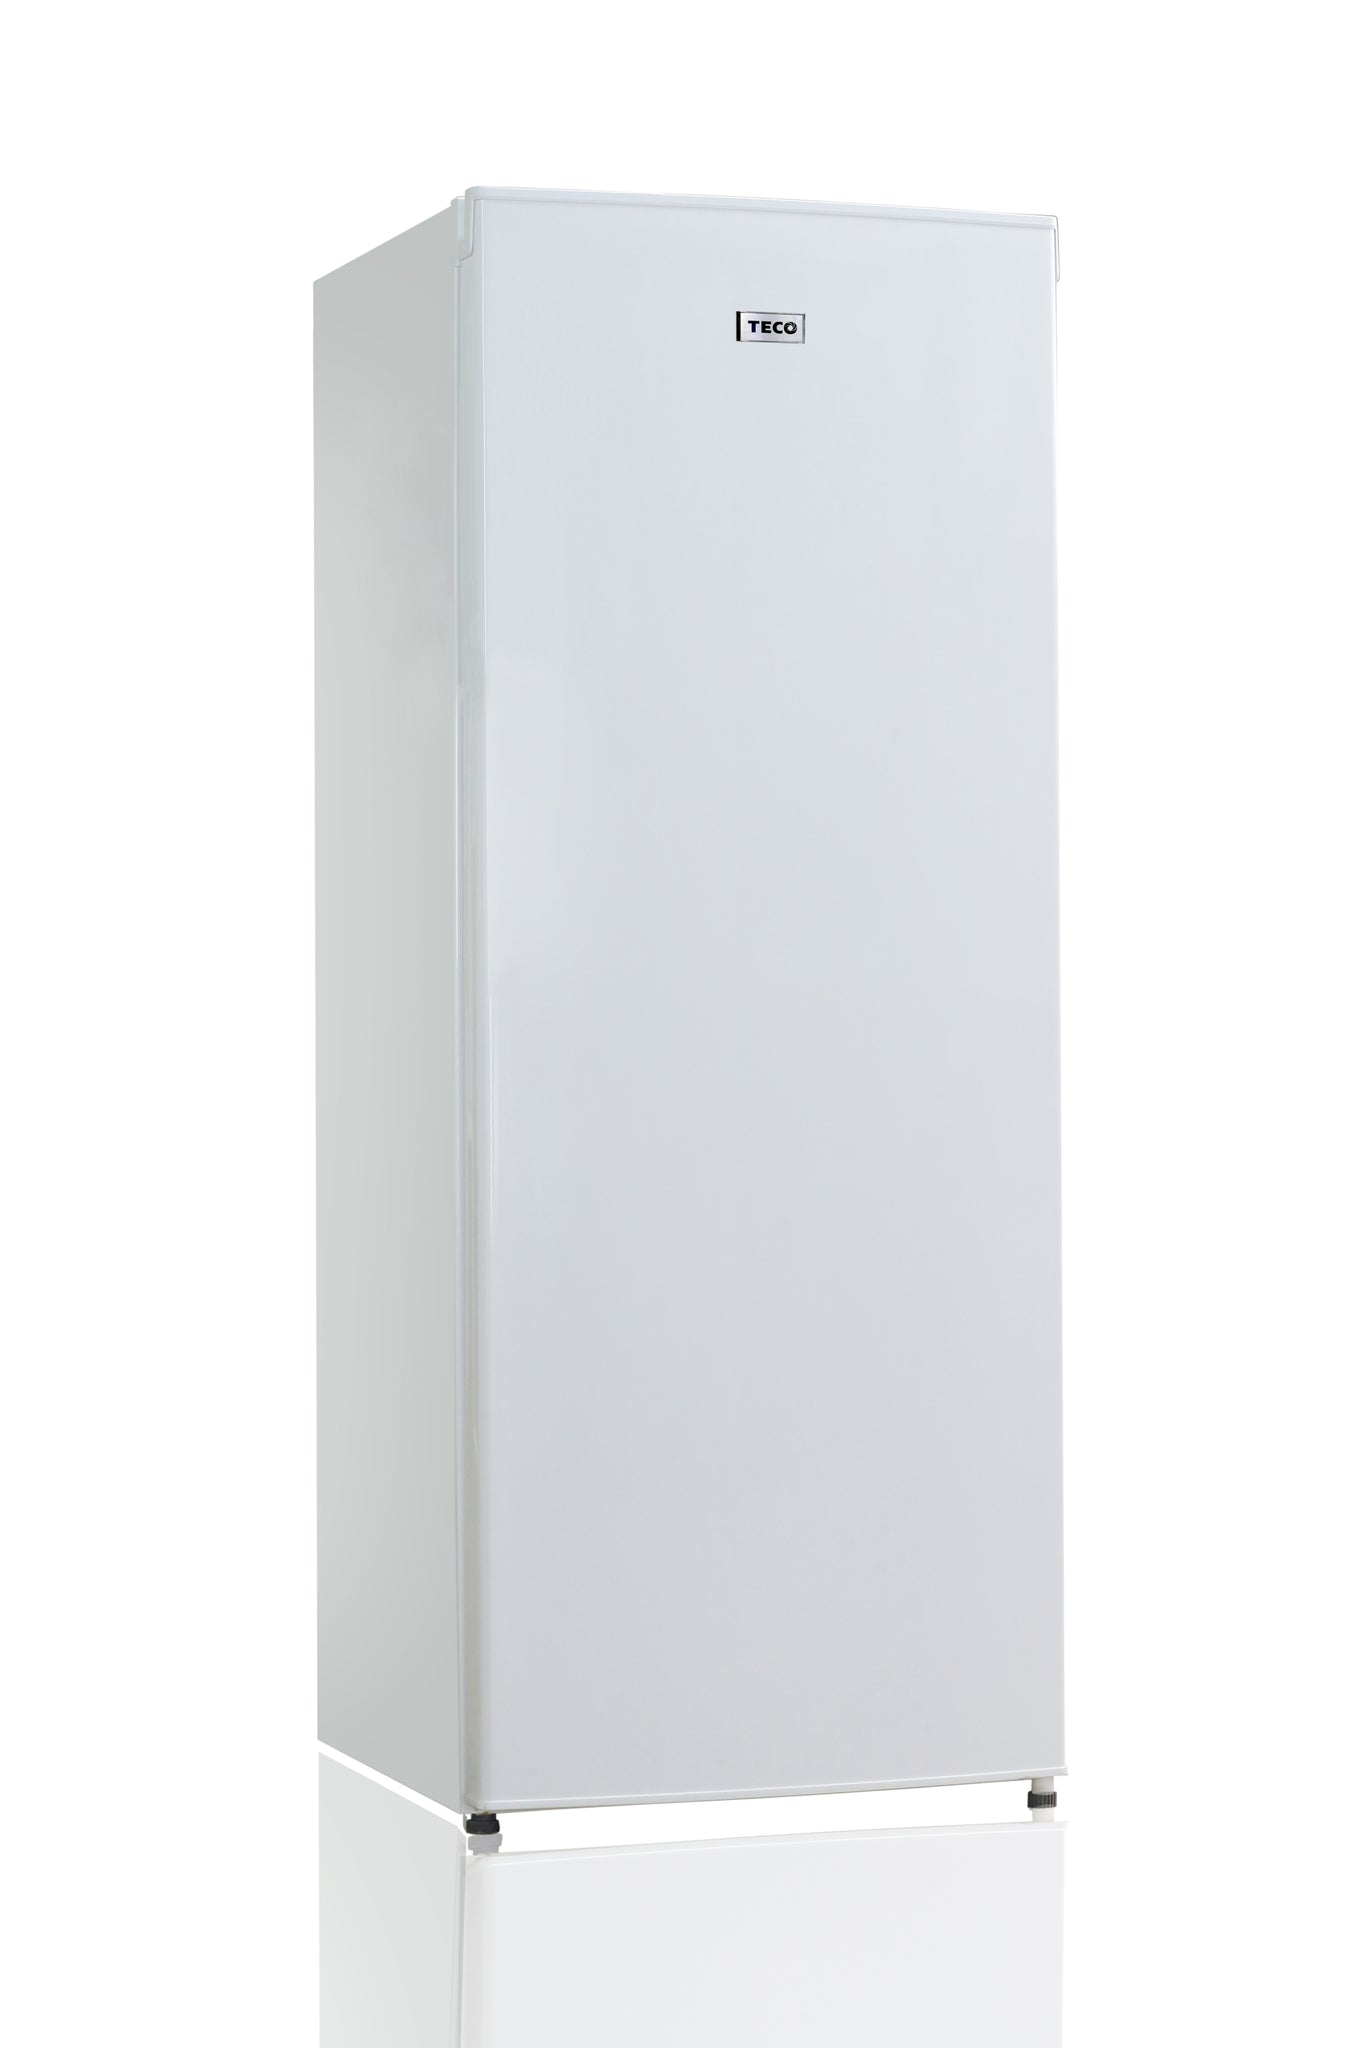 TECO 162 Litre Vertical Freezer  Model TVF162WMPCM